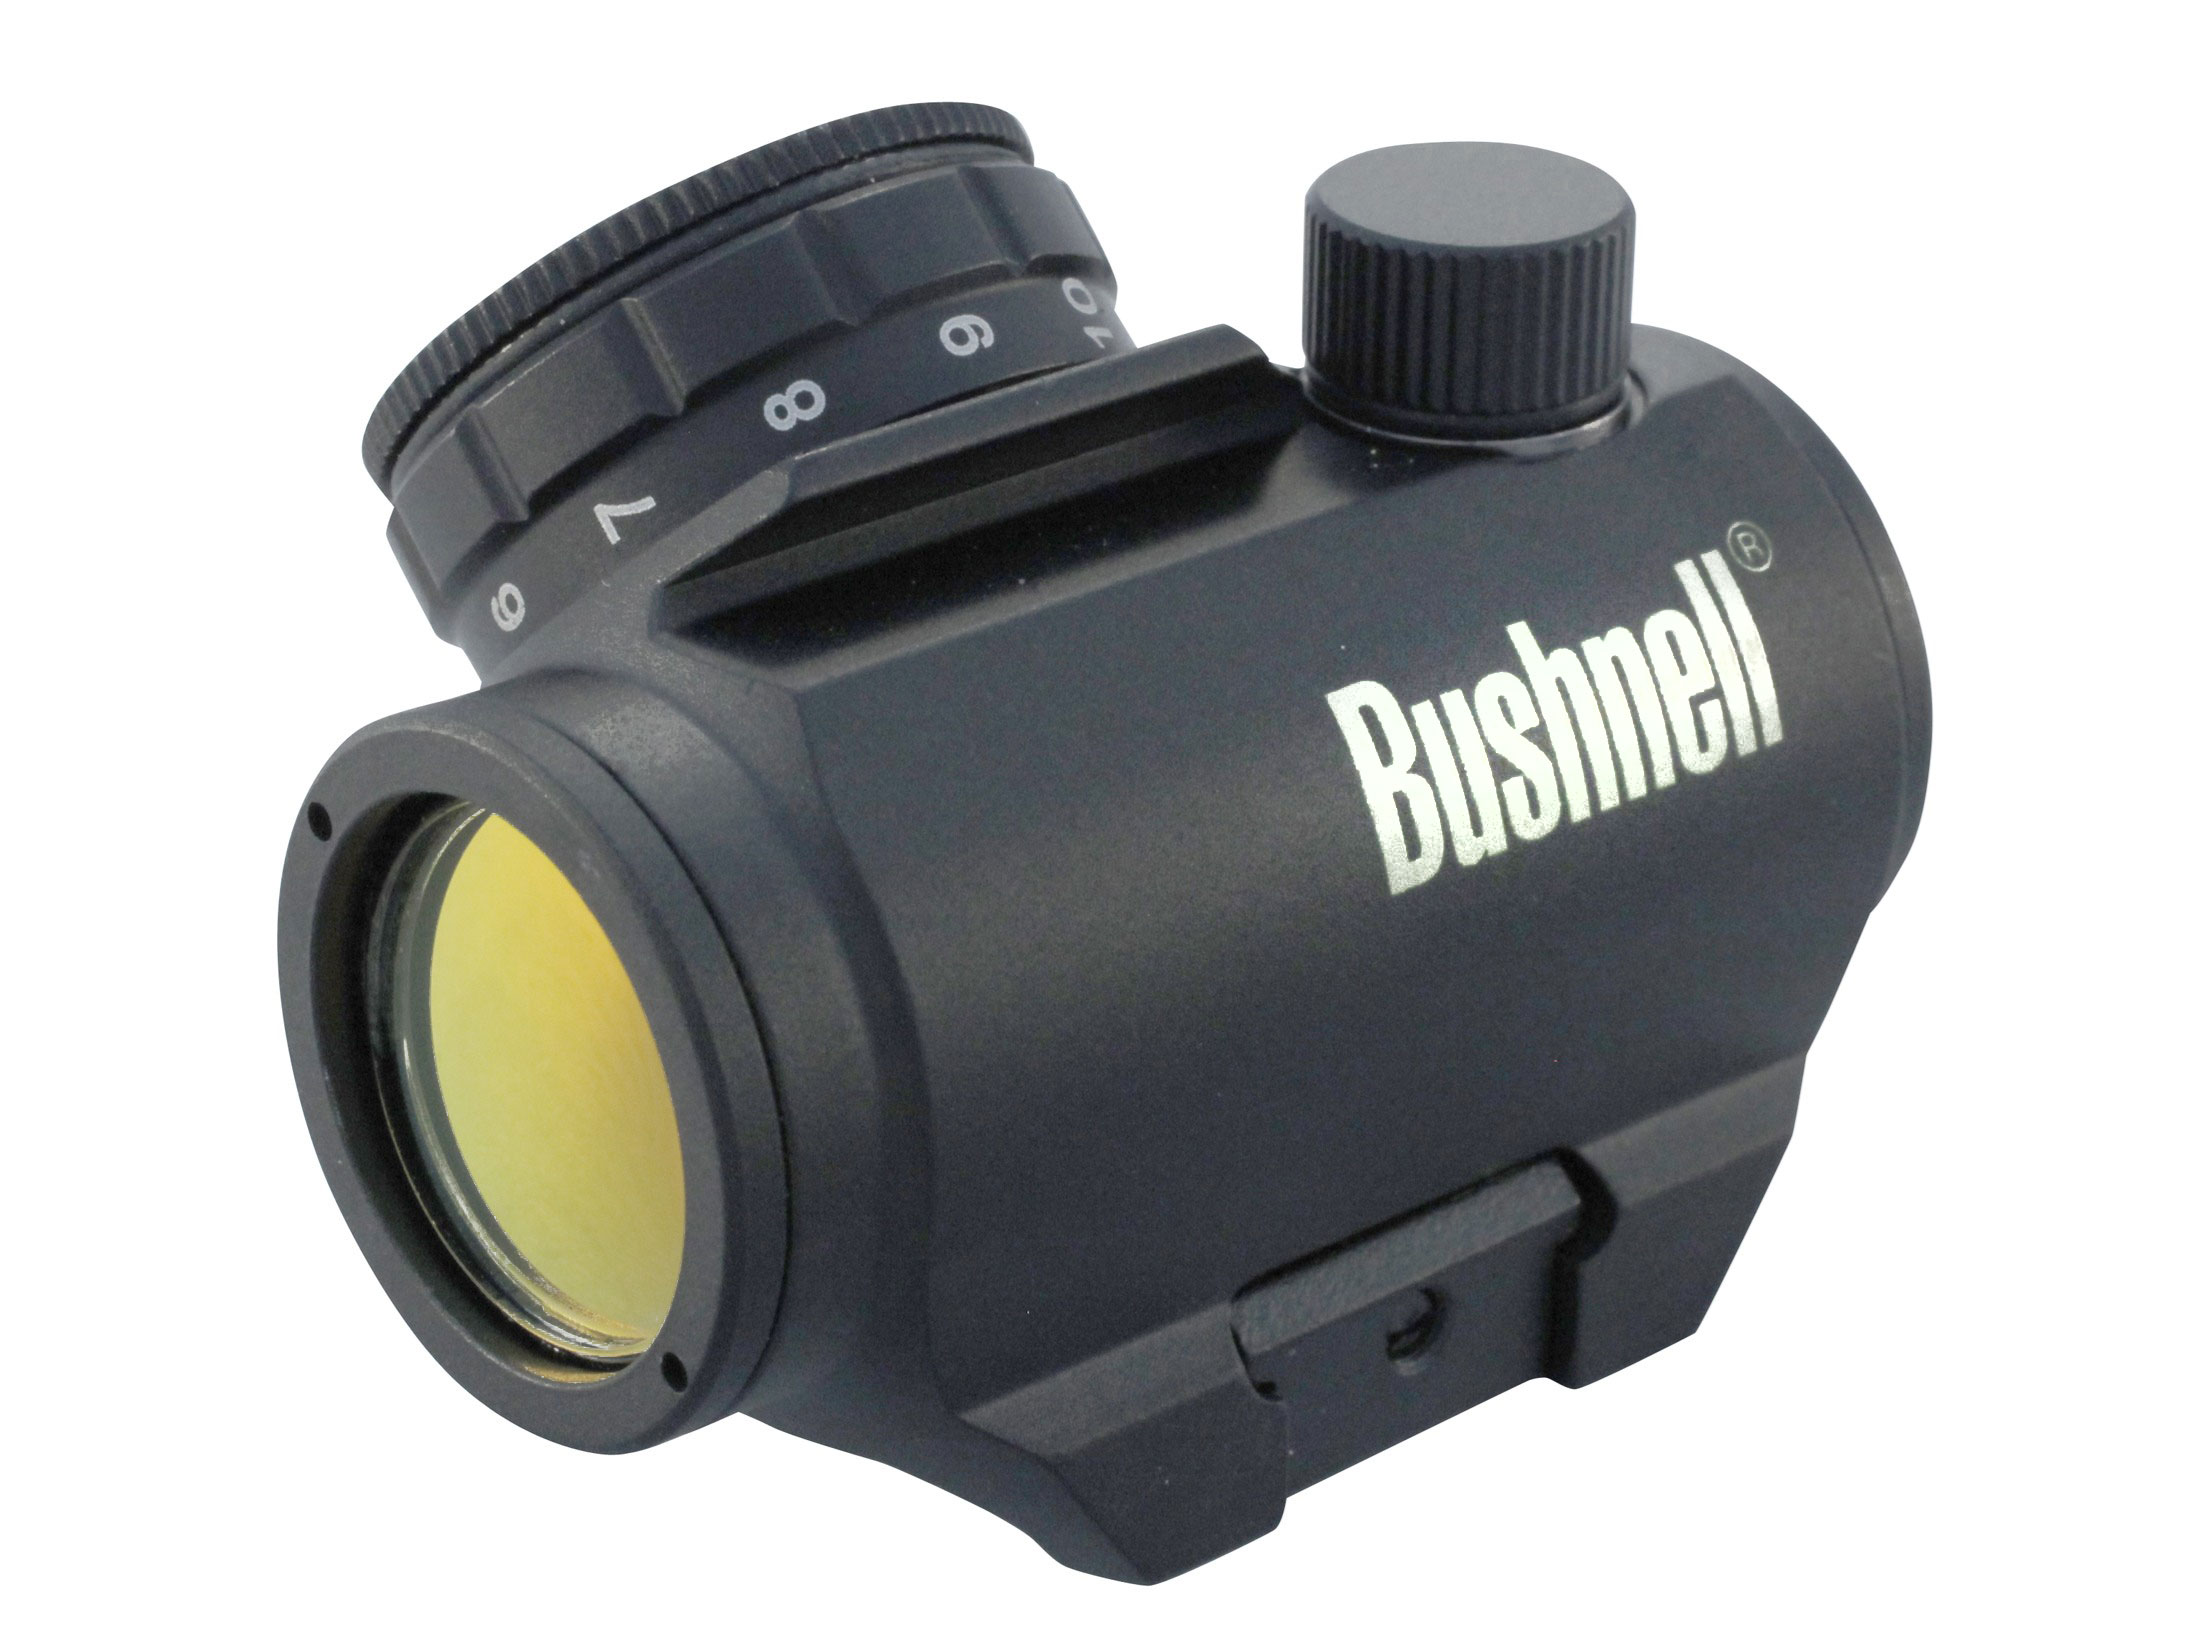 Bushnell-Trophy-TRS-25-Red-Dot-Sight-Riflescope-1-x-25mm-Black-100-NEW-731303 